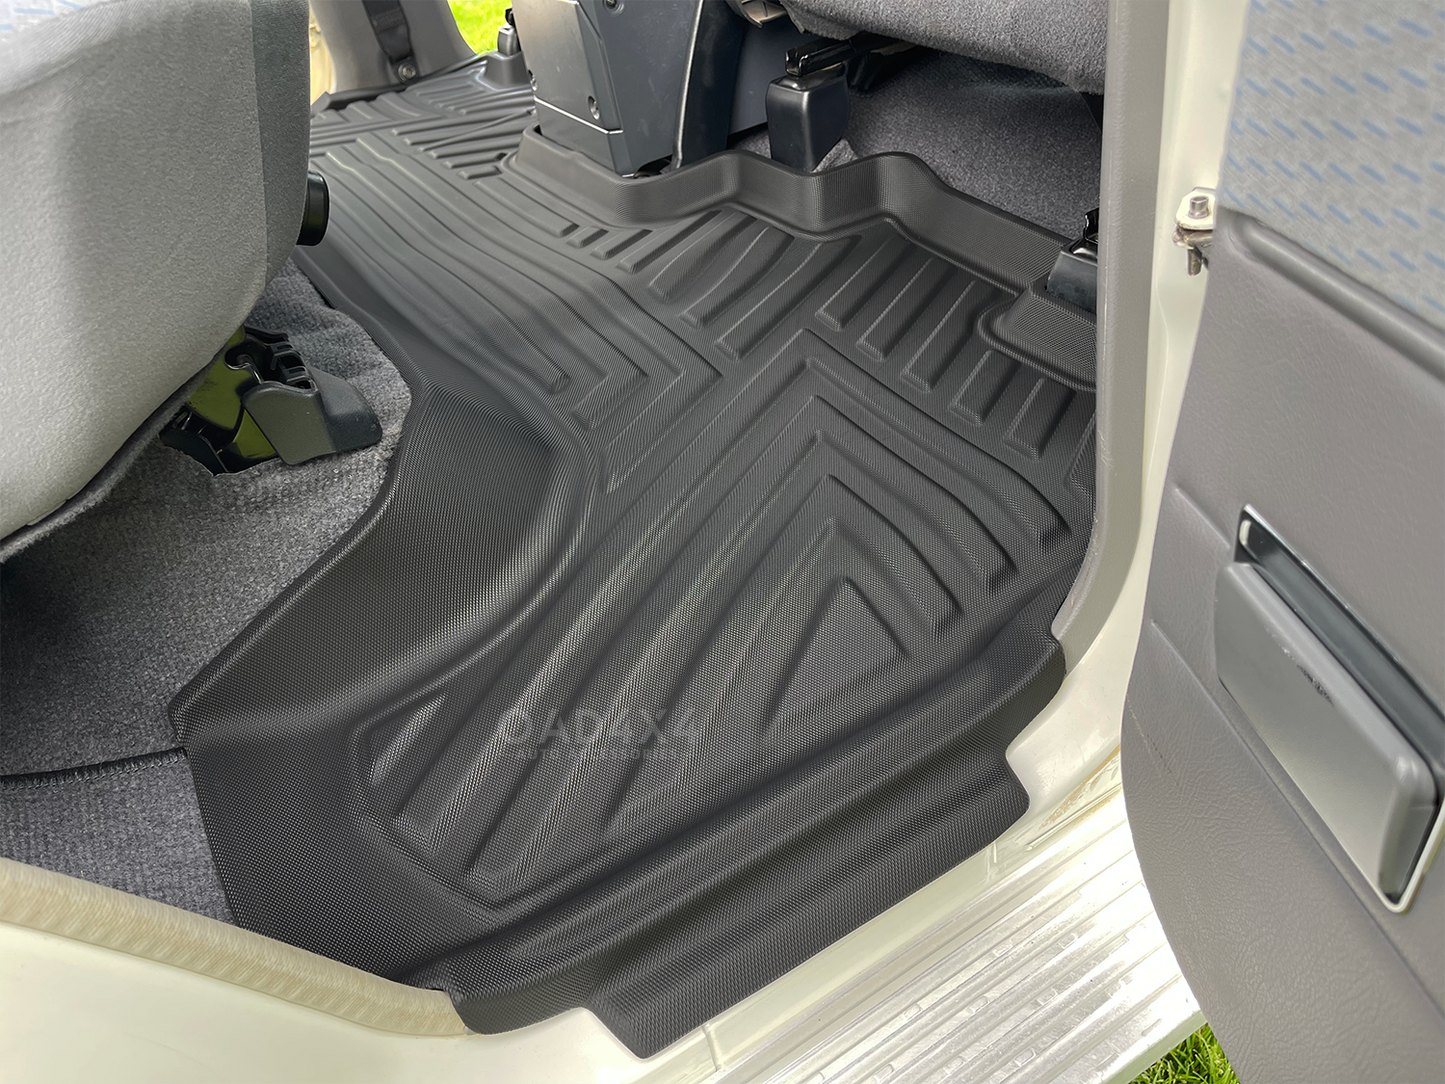 Pre-order 5D TPE Floor Mats for Toyota Landcruiser 76 79 Dual Cab 2012-2023 Door Sill Covered Car Floor Mat Liner for Land Cruiser LC79 LC76